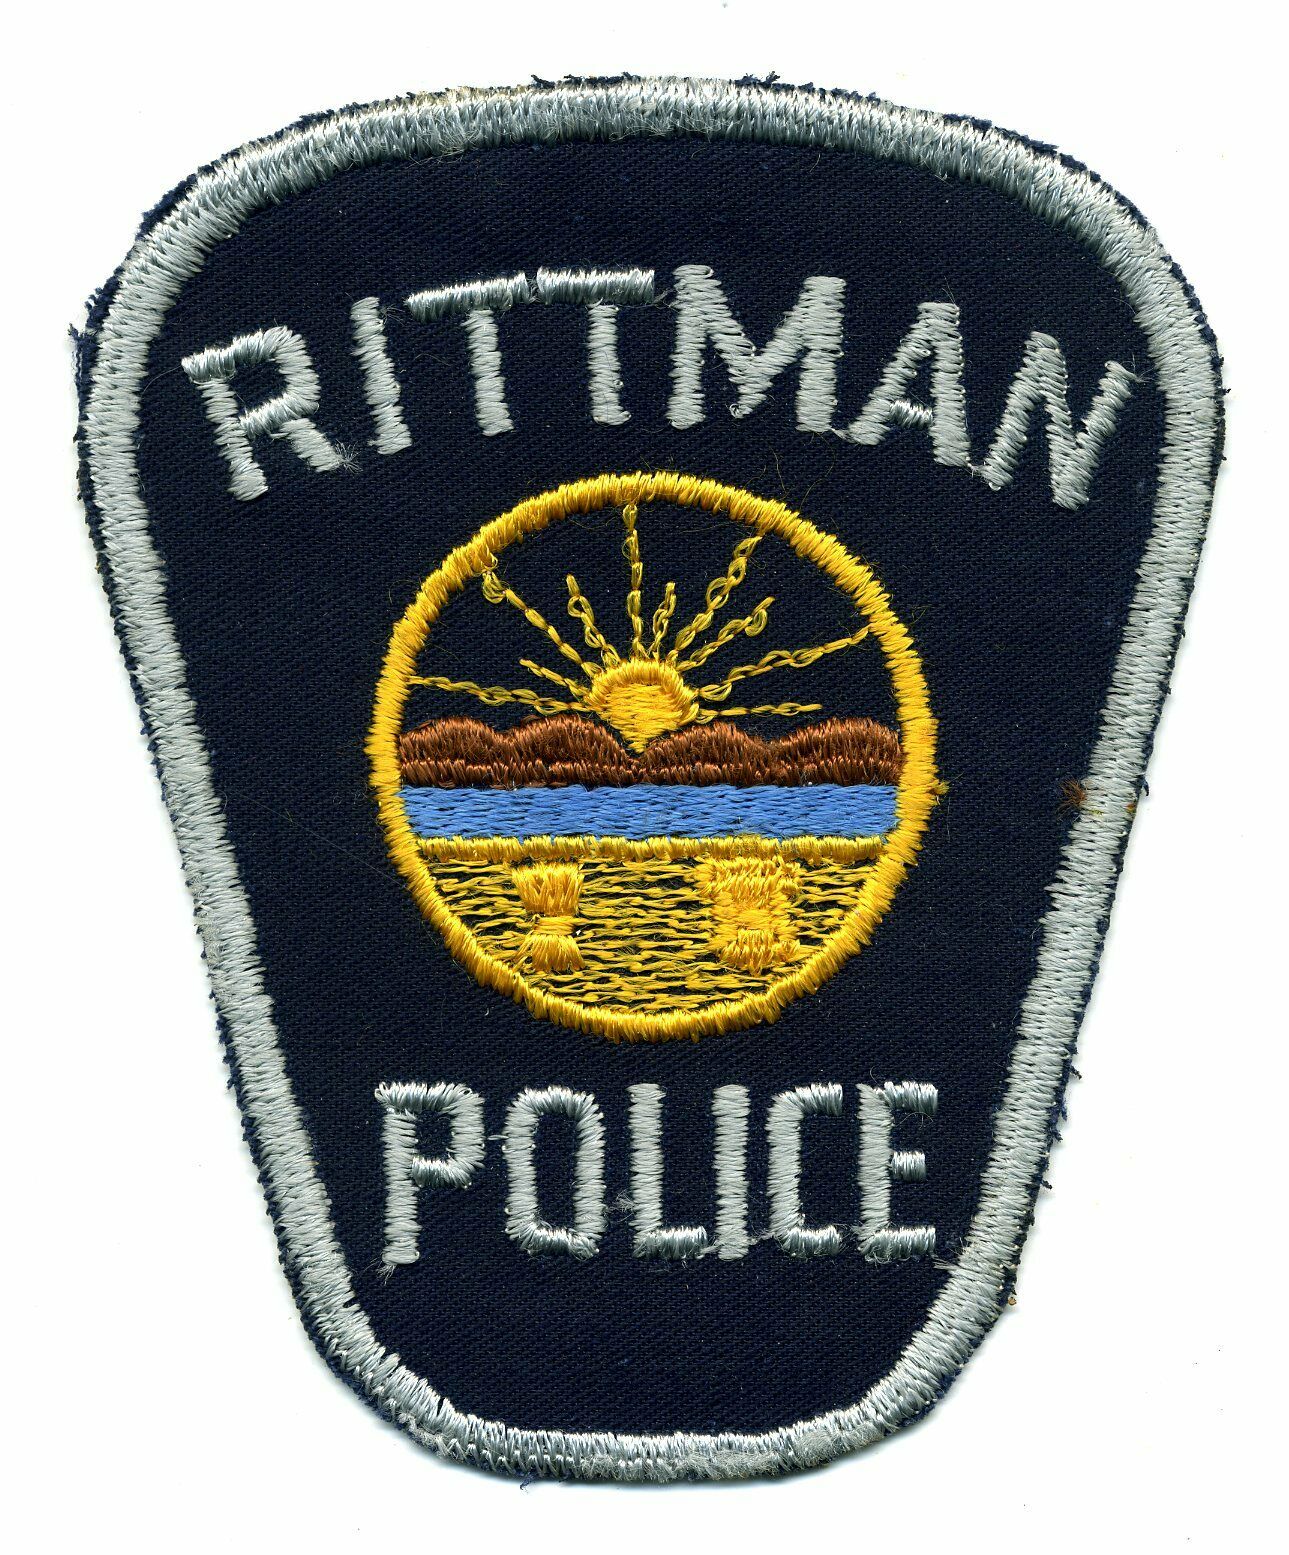 Rittman Ohio Police Patch - Oh Sheriff